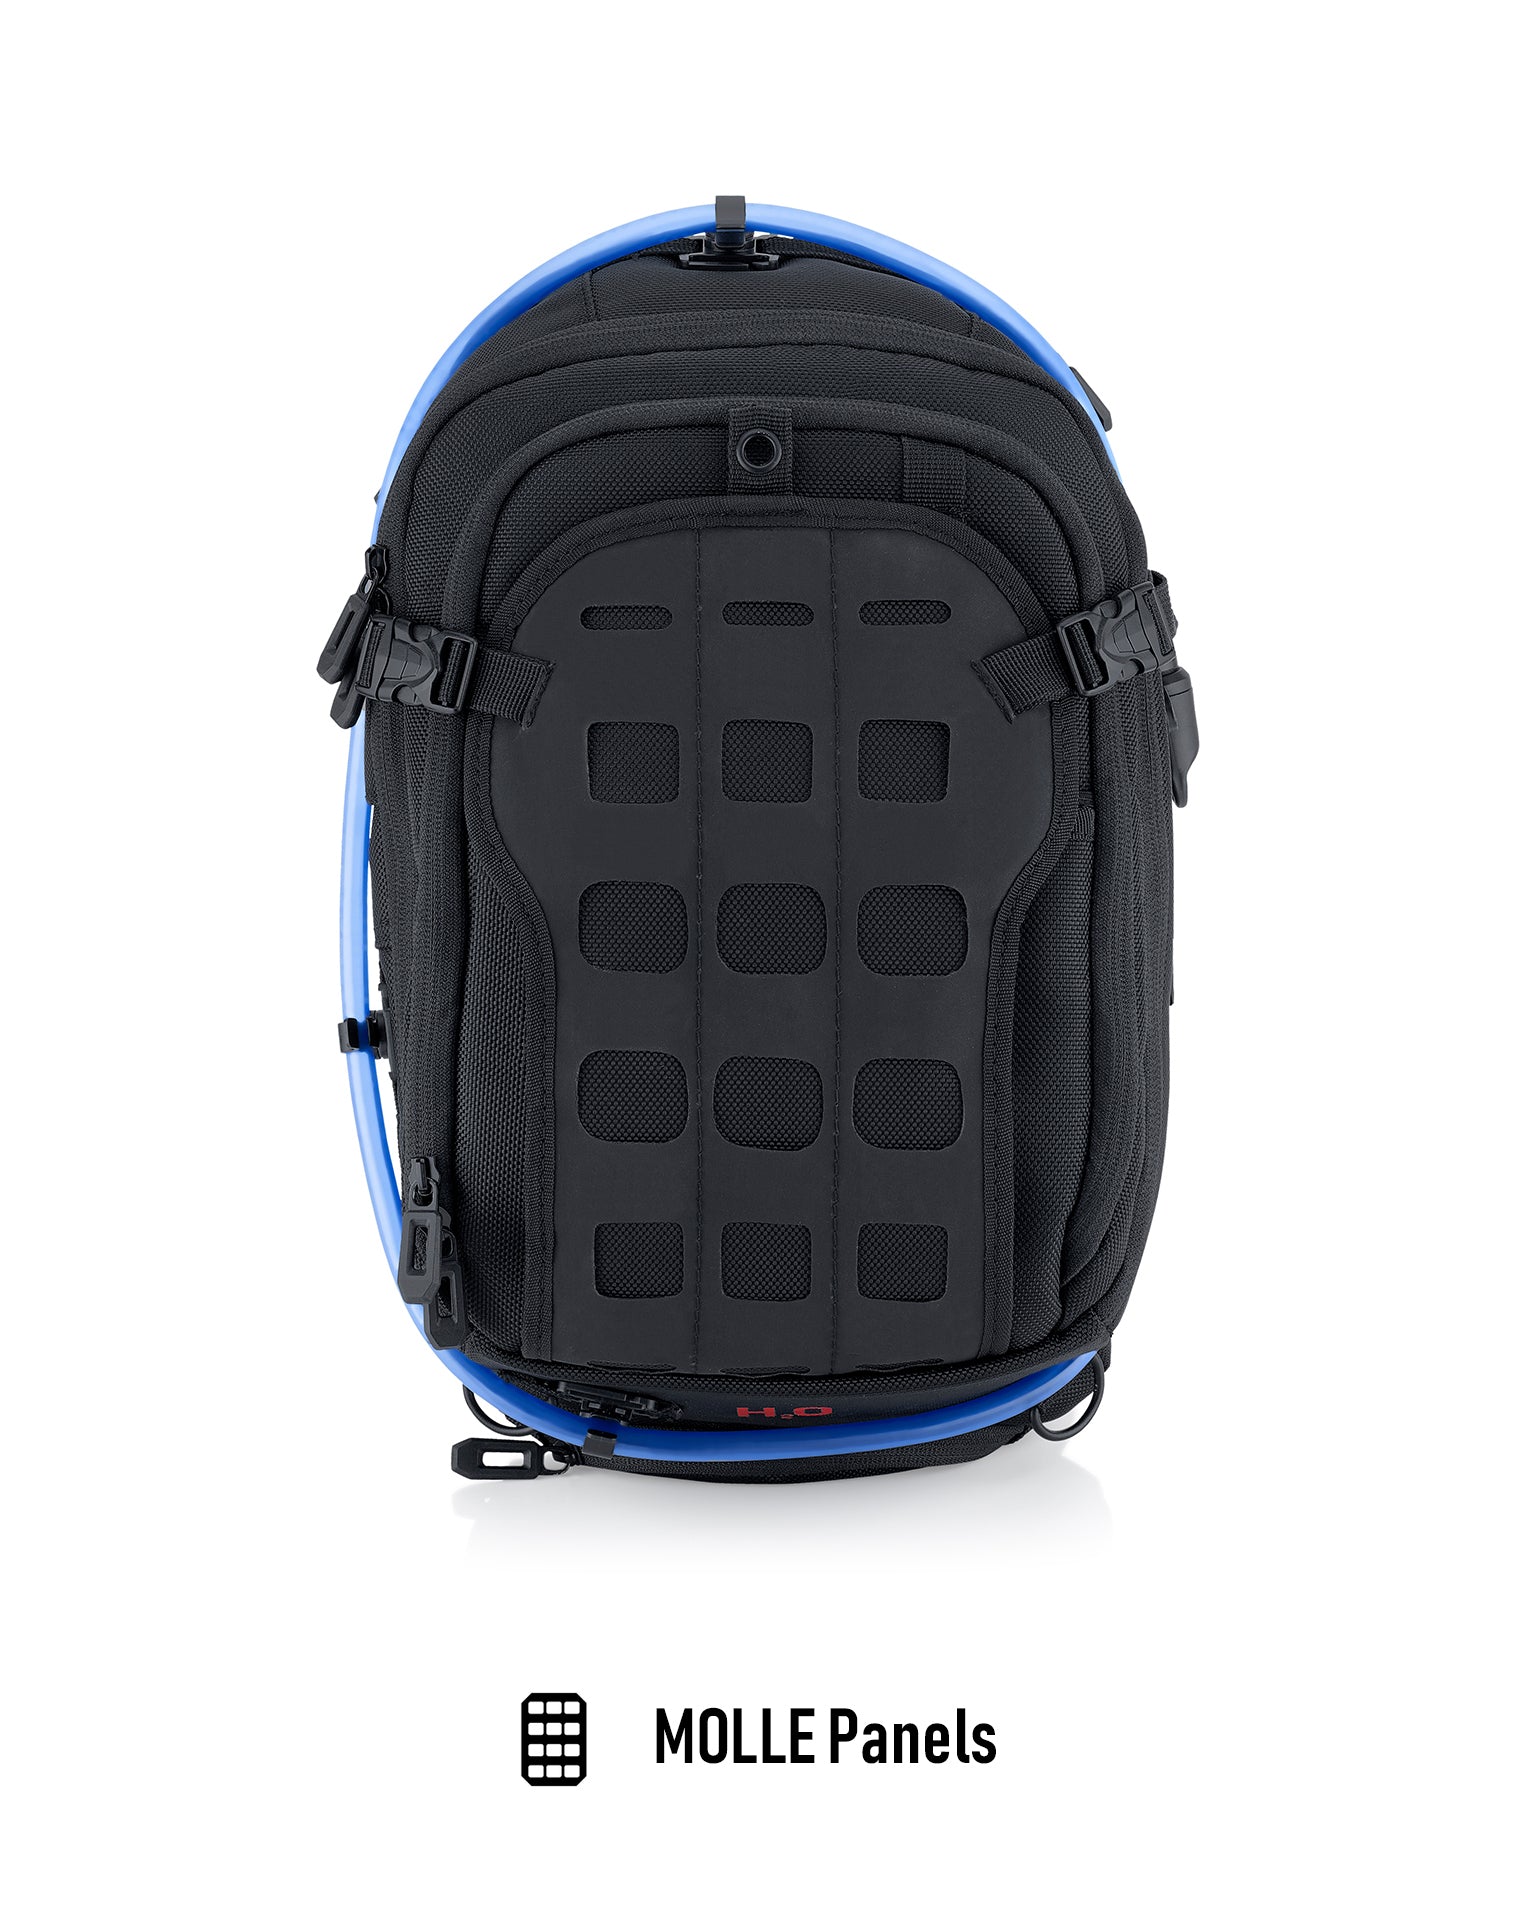 Viking Apex Kawasaki ADV Touring Backpack with Hydration Pack